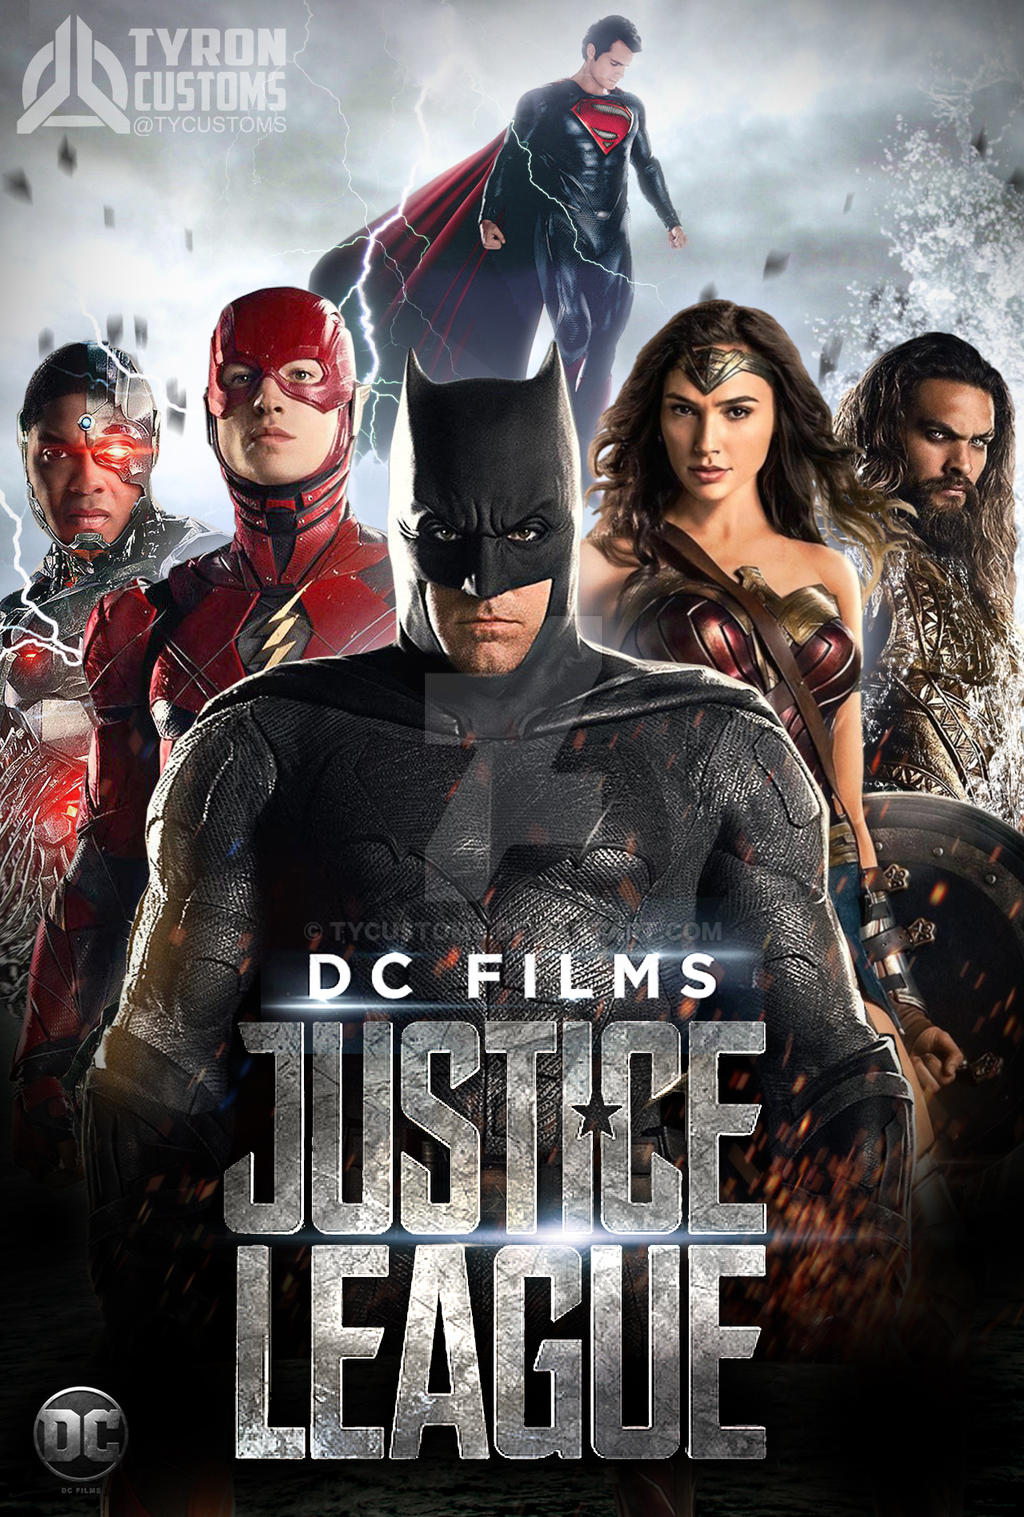 Justice League 2017 Poster Fan Art Wallpapers